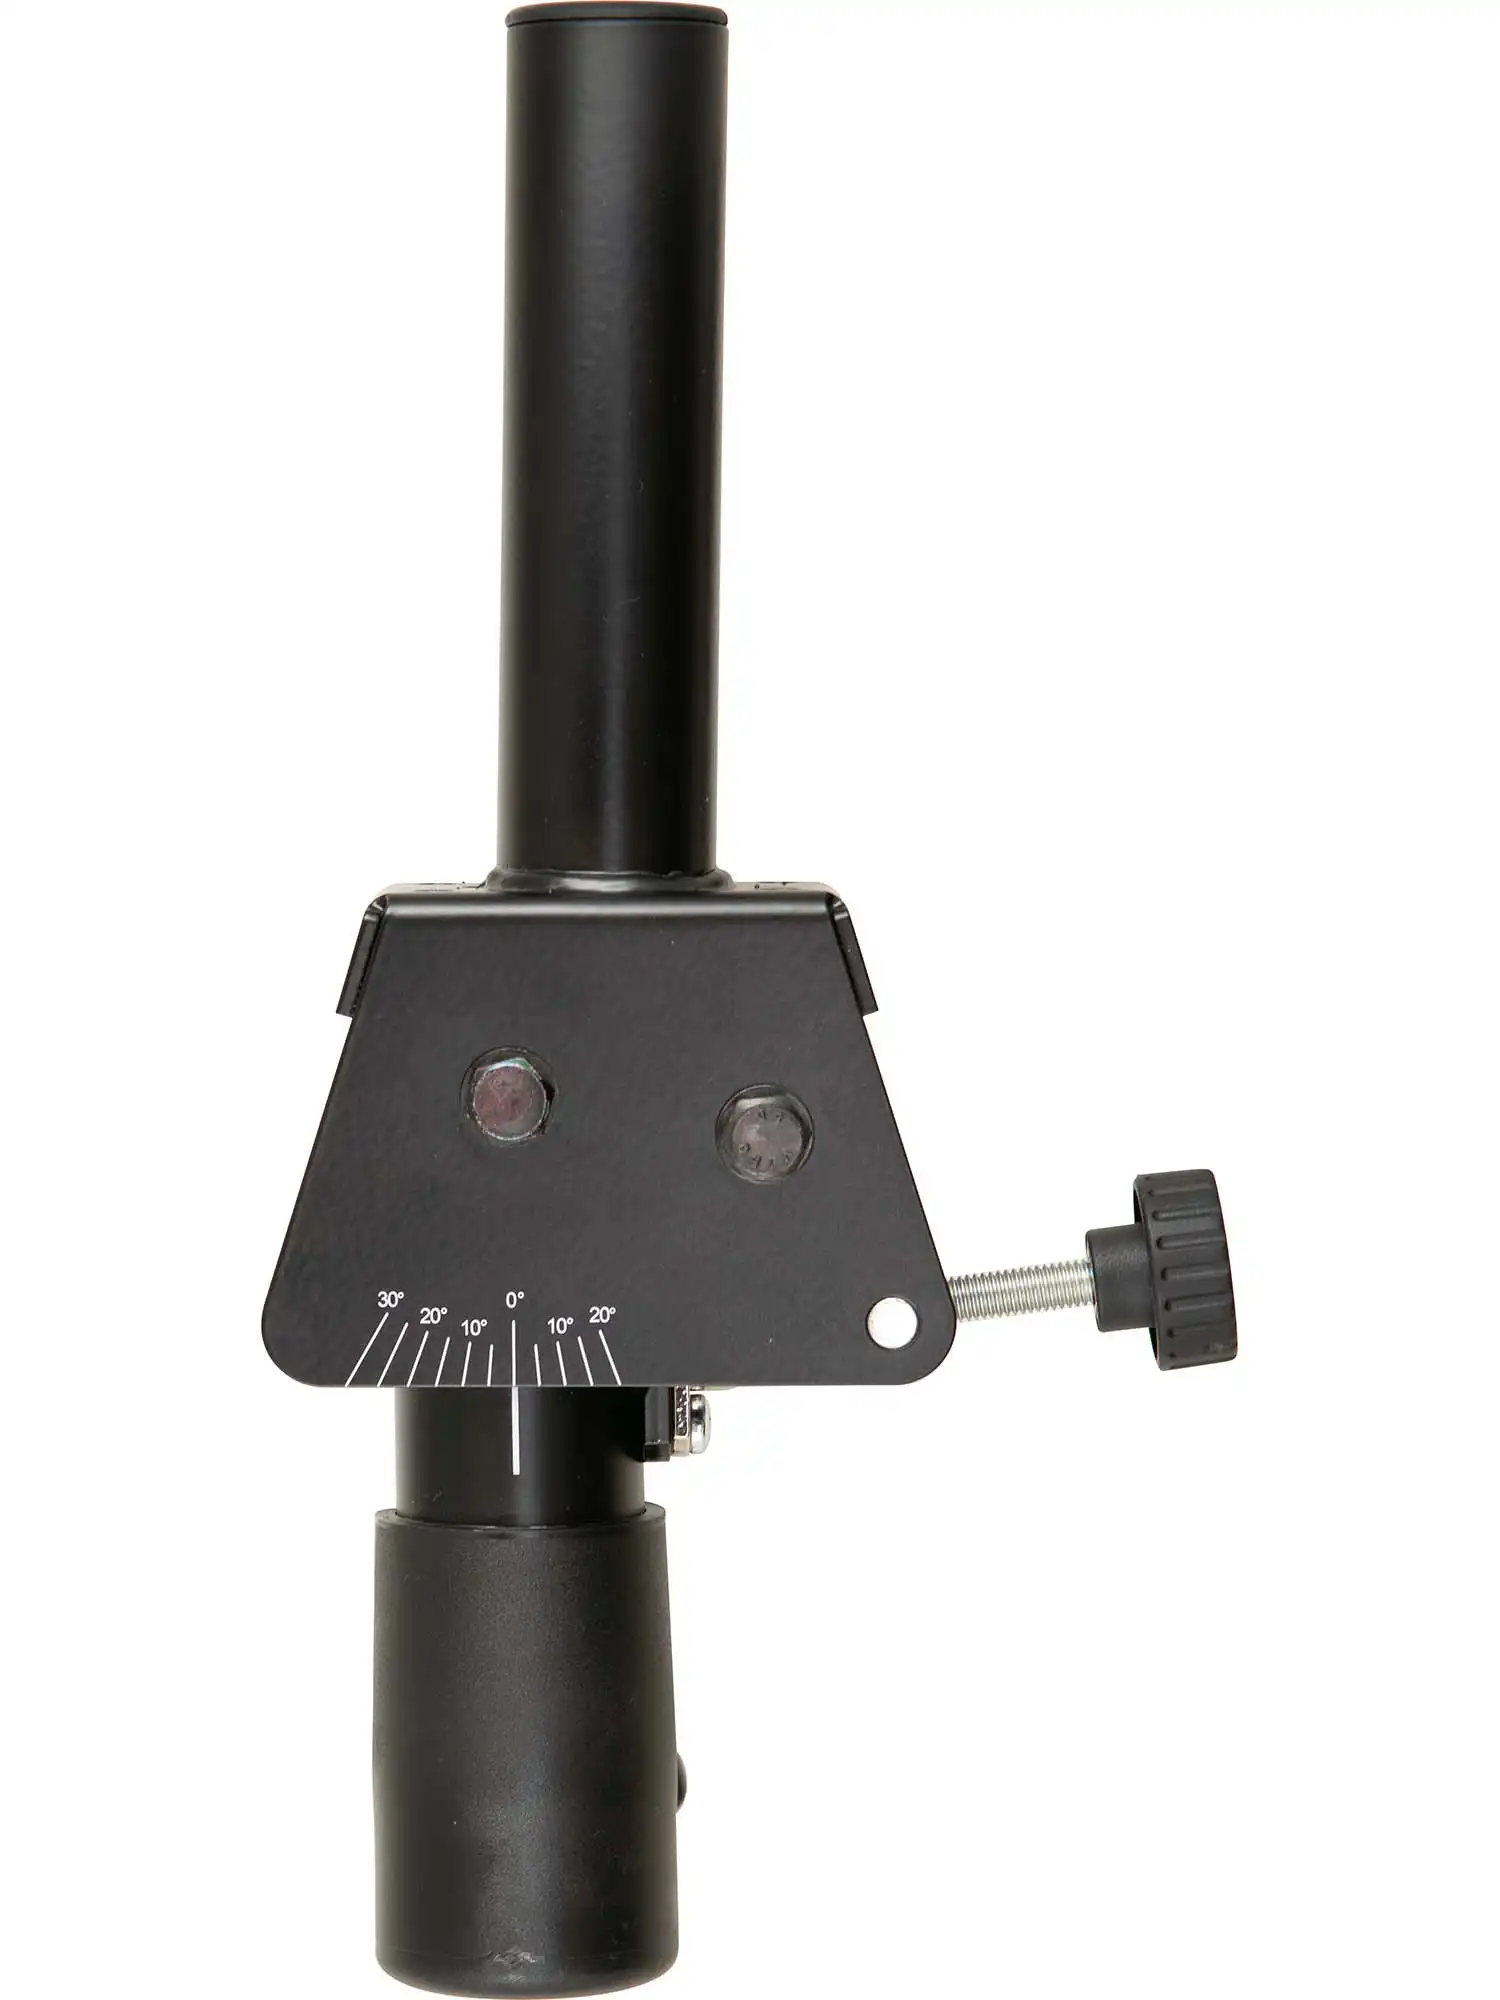 euromet controlled tilting system for speaker on stand image